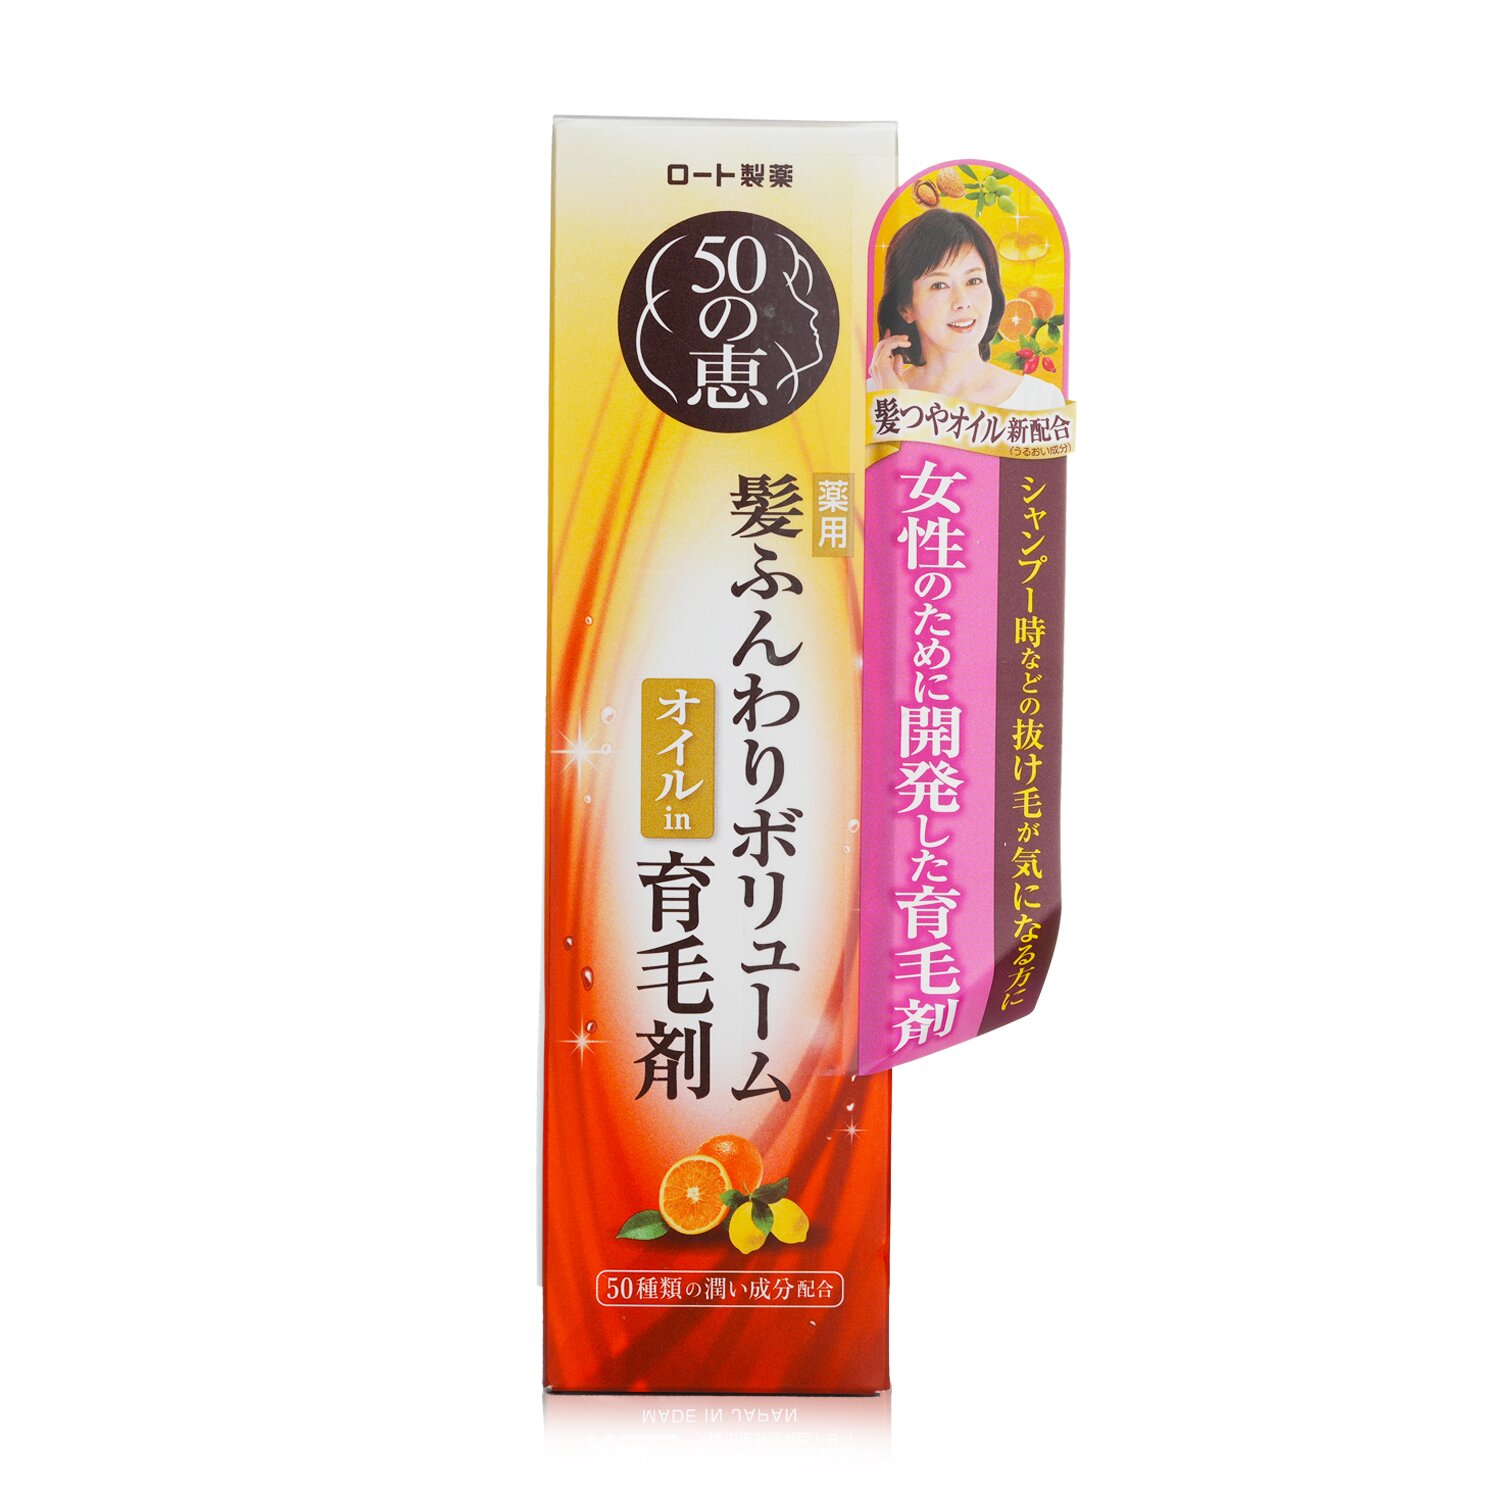 50 Megumi - 養髮精華液